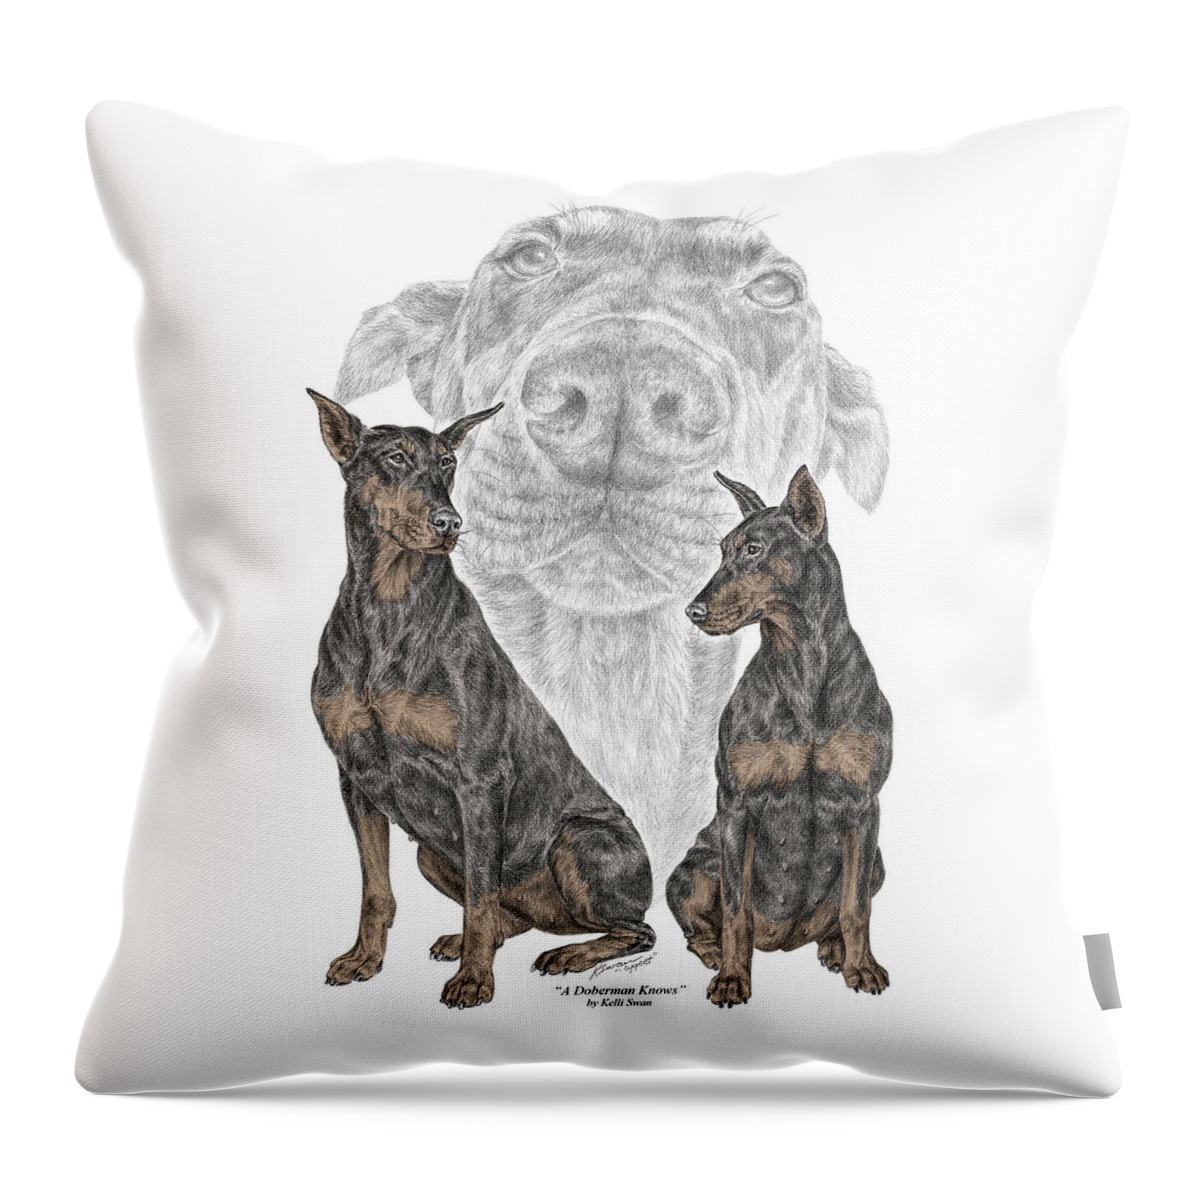 Doberman Throw Pillow featuring the drawing A Doberman Knows - Dobe Pinscher Dog Art Print by Kelli Swan